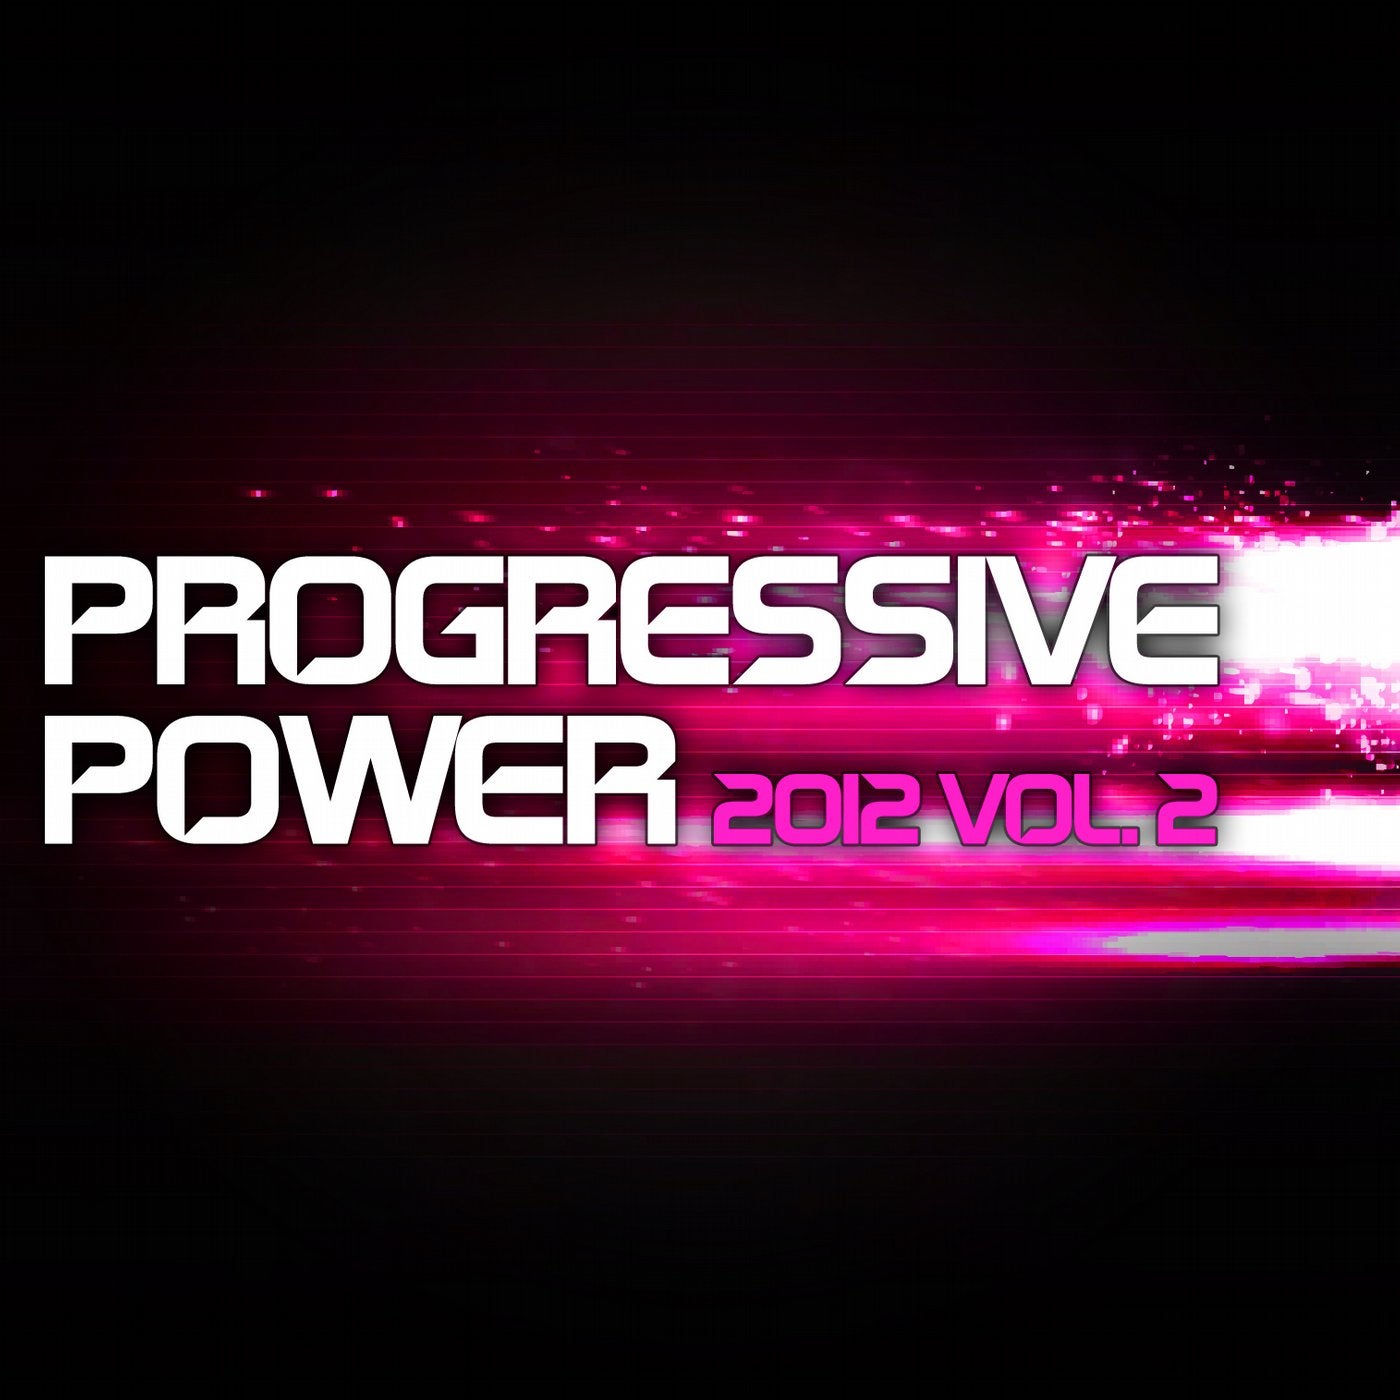 Progressive Power 2012 - Vol. 2